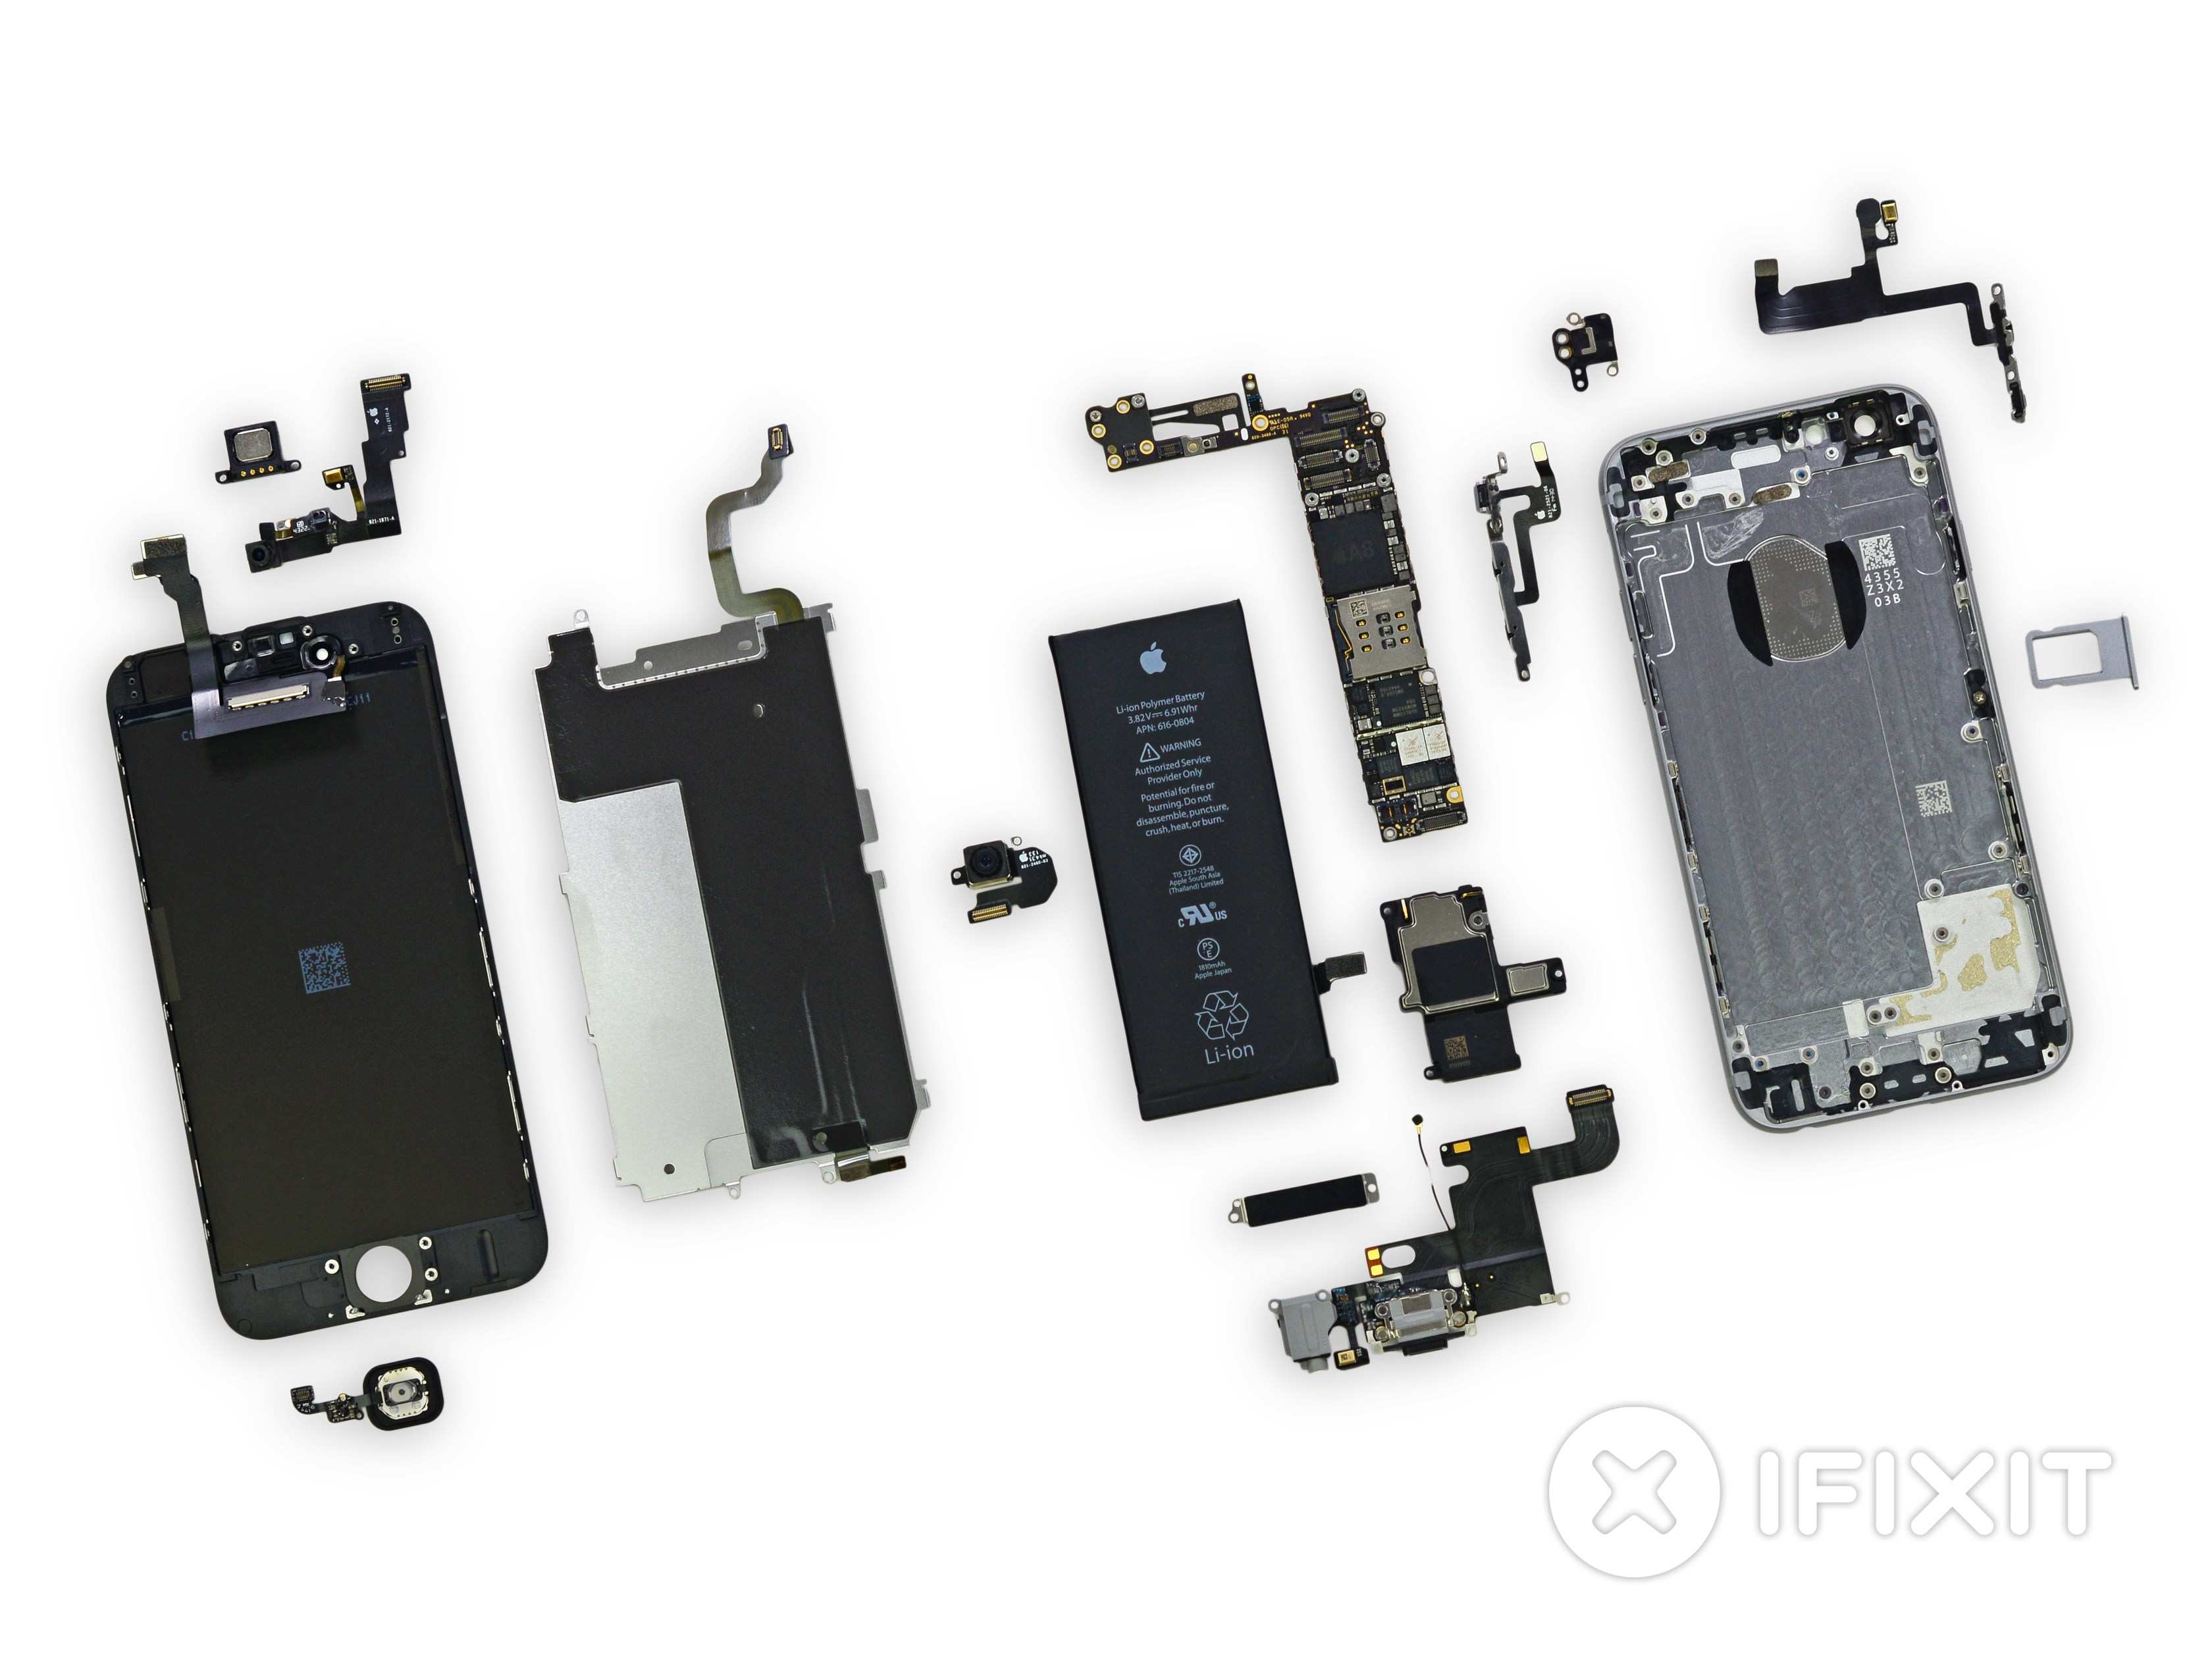 Iphone 6 Teardown Ifixit - Iphone 6 Teardown , HD Wallpaper & Backgrounds